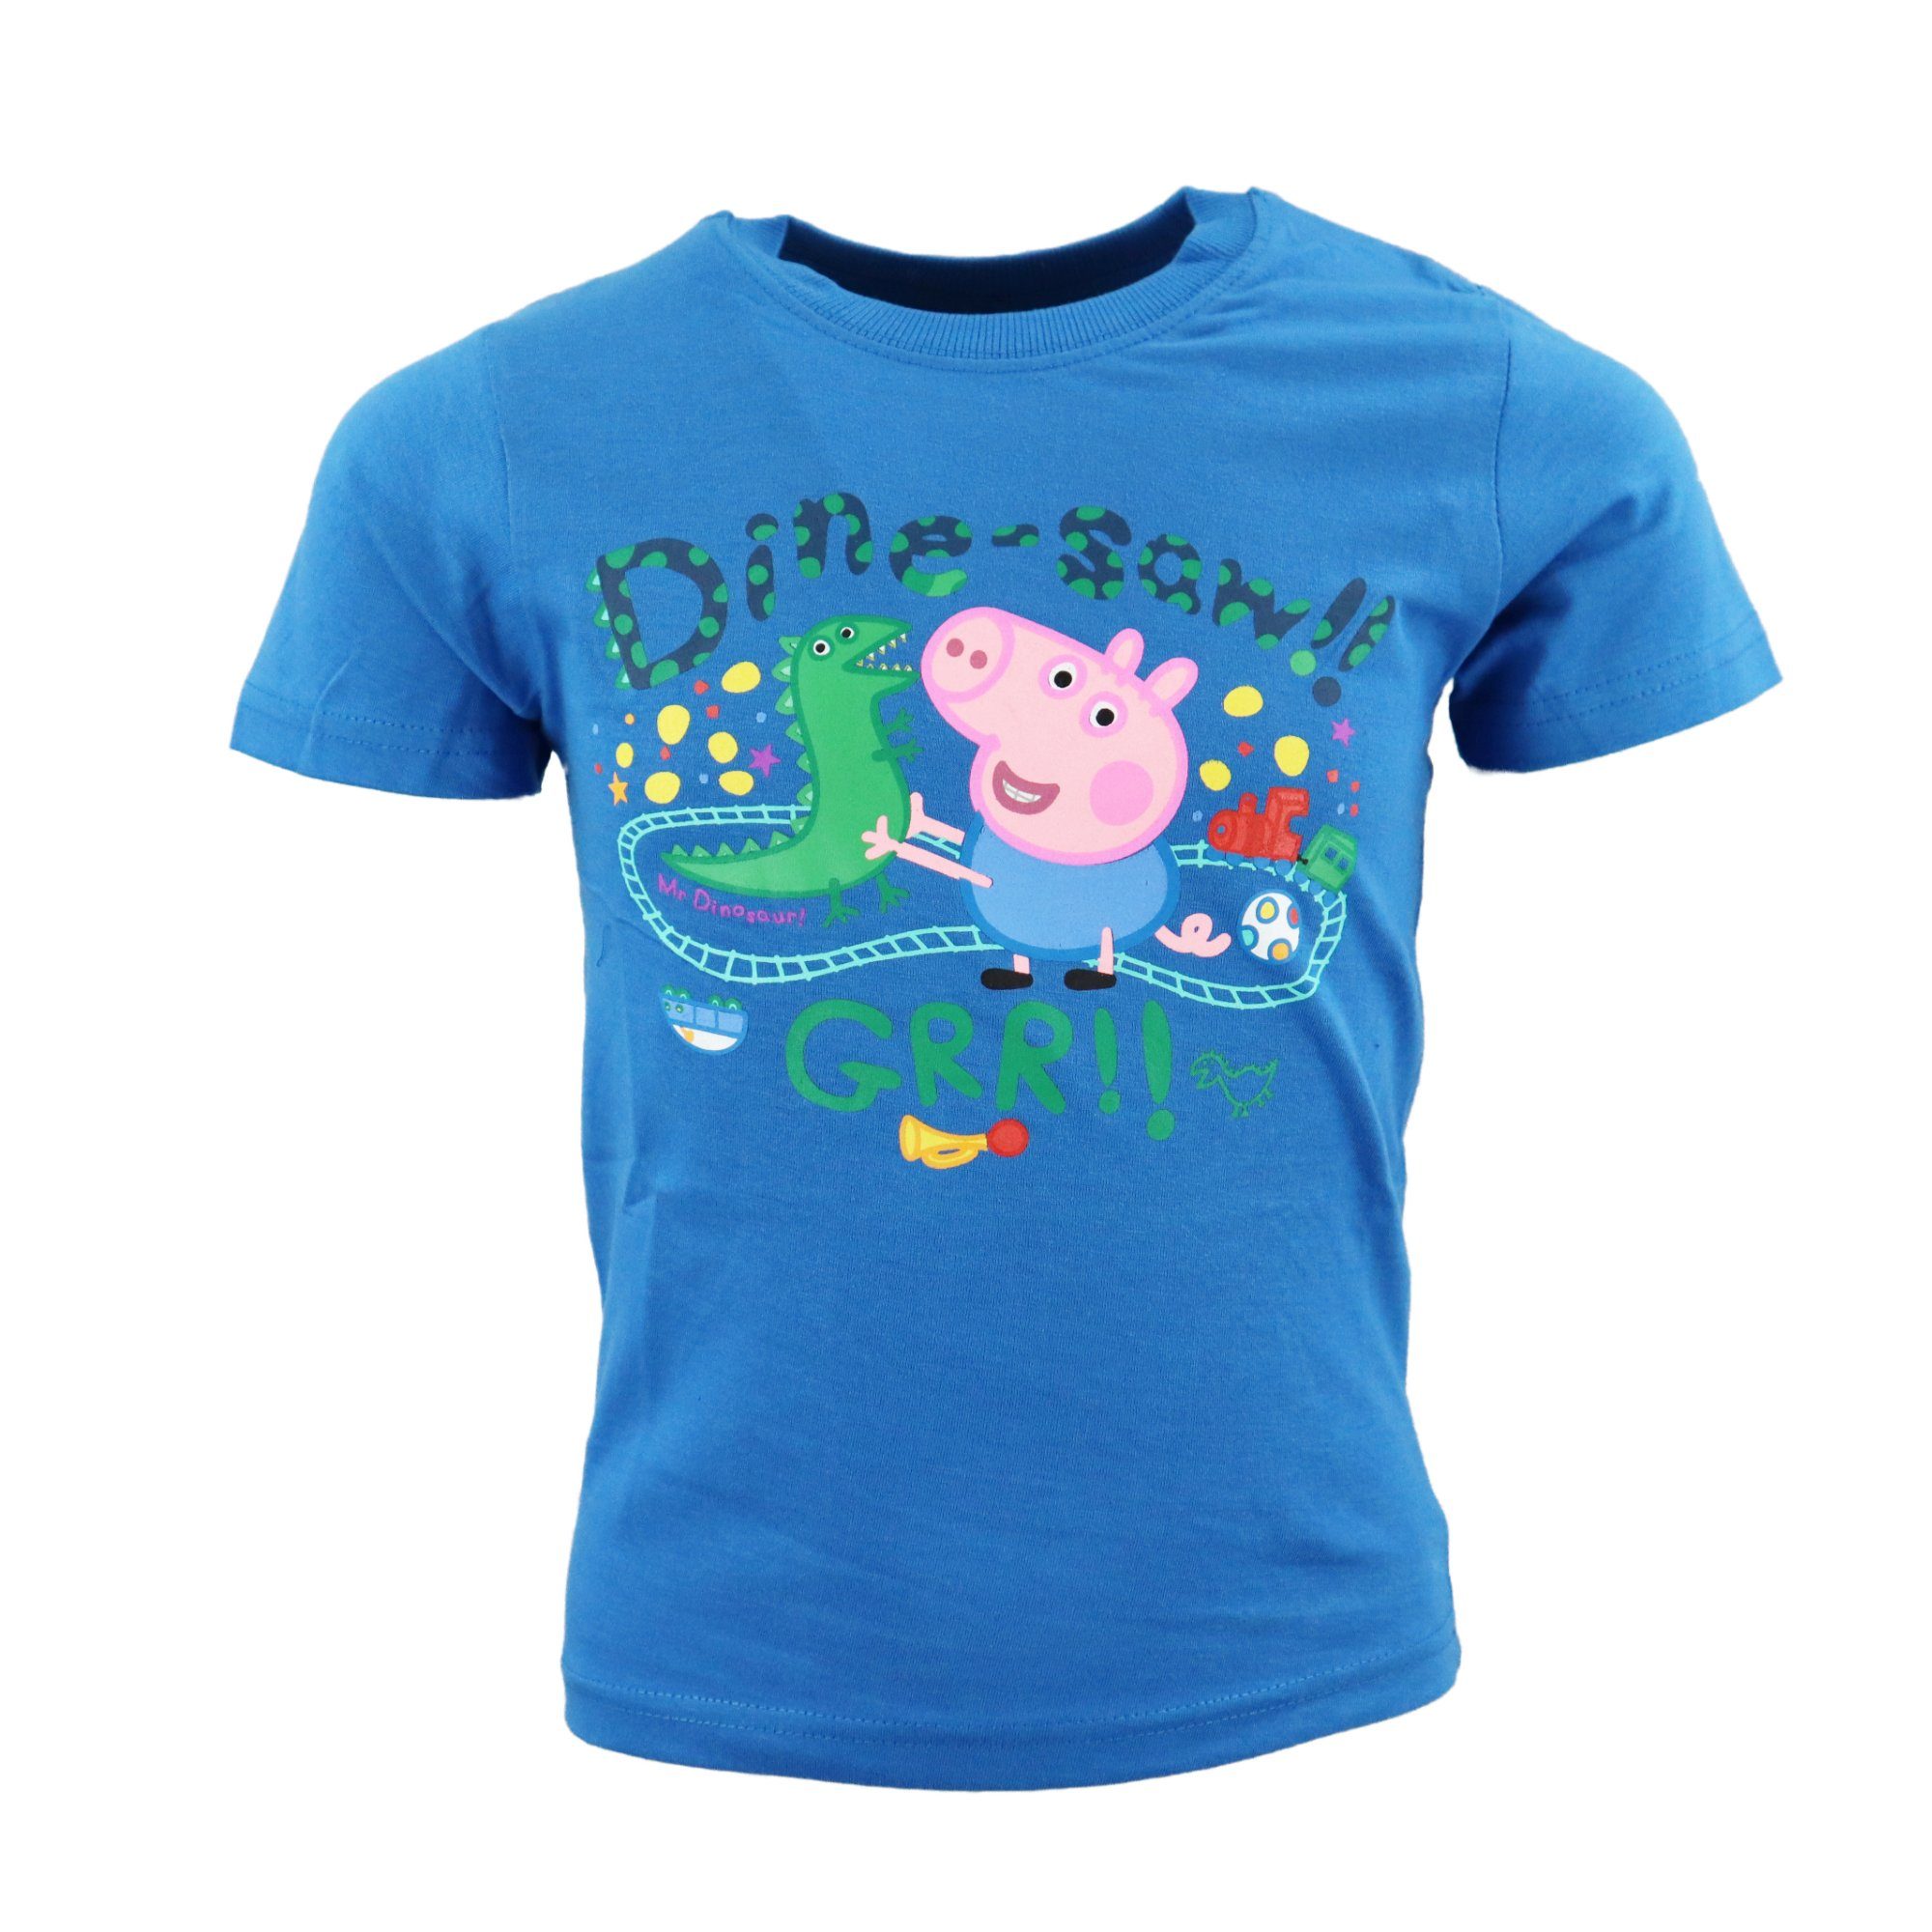 Peppa Pig Print-Shirt Peppa Wutz George Saurier Kinder T-Shirt Gr. 92 bis 116, Baumwolle Blau